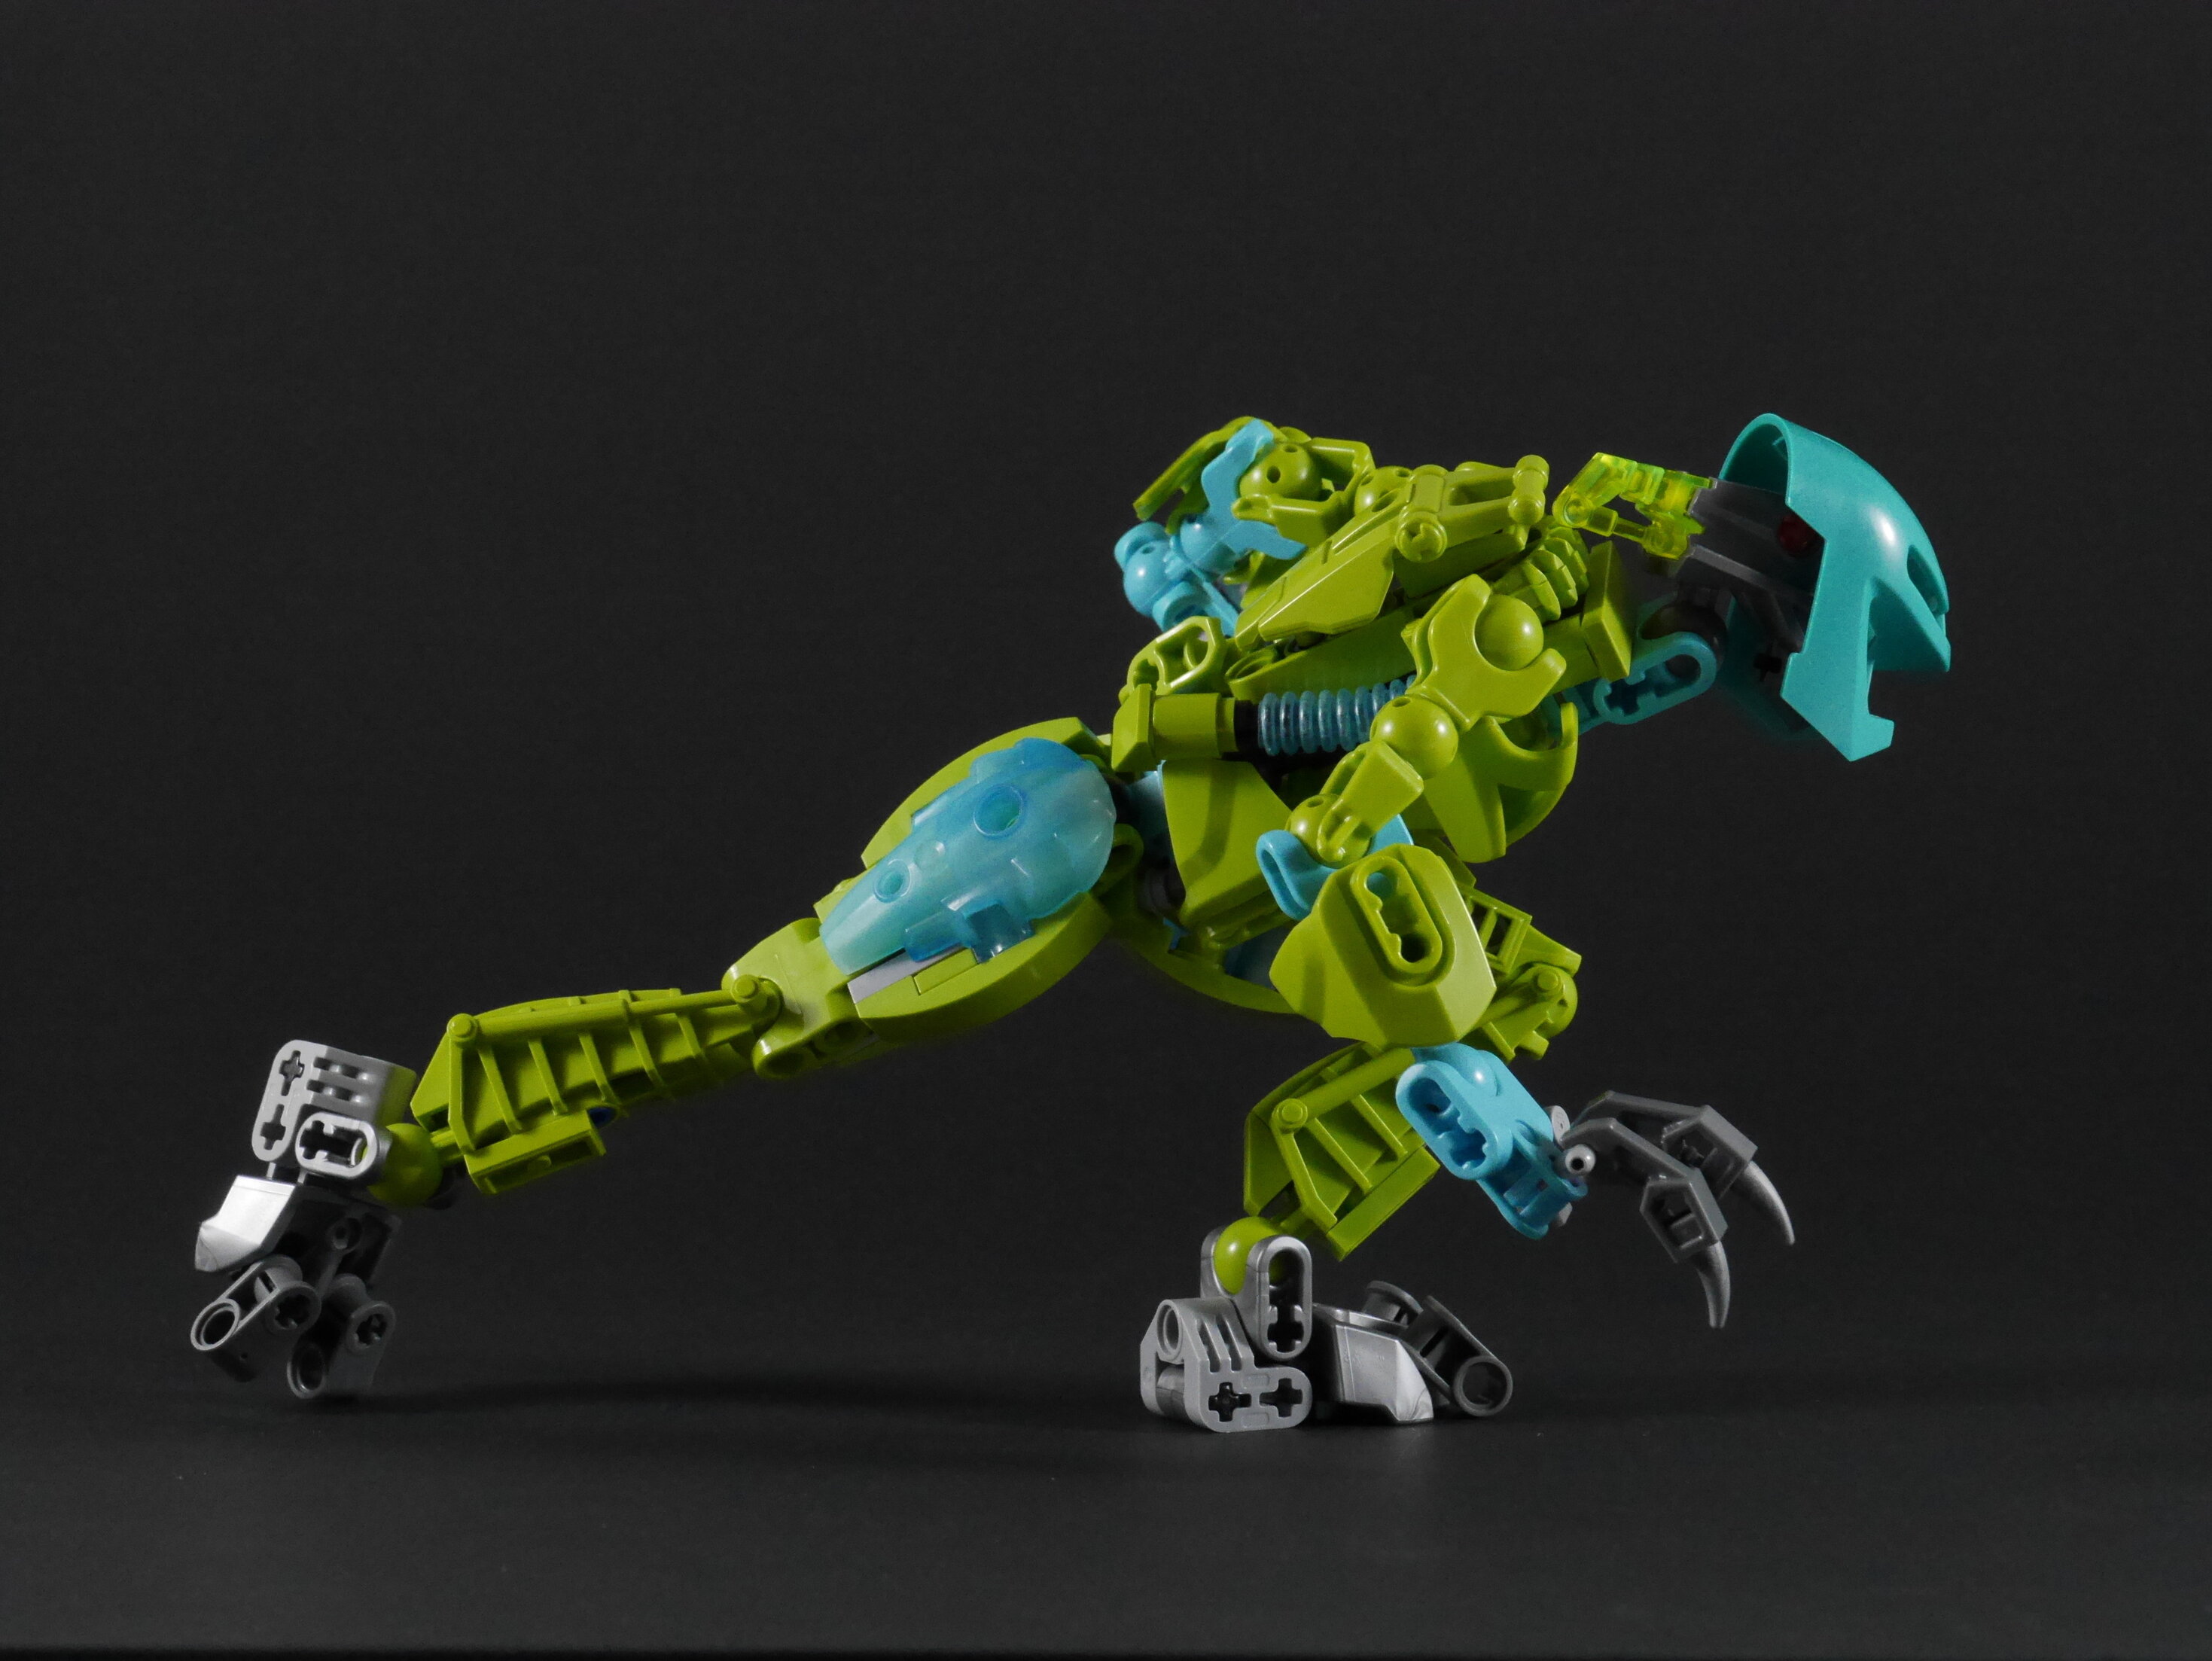 LEGO Bionicle Barraki moc